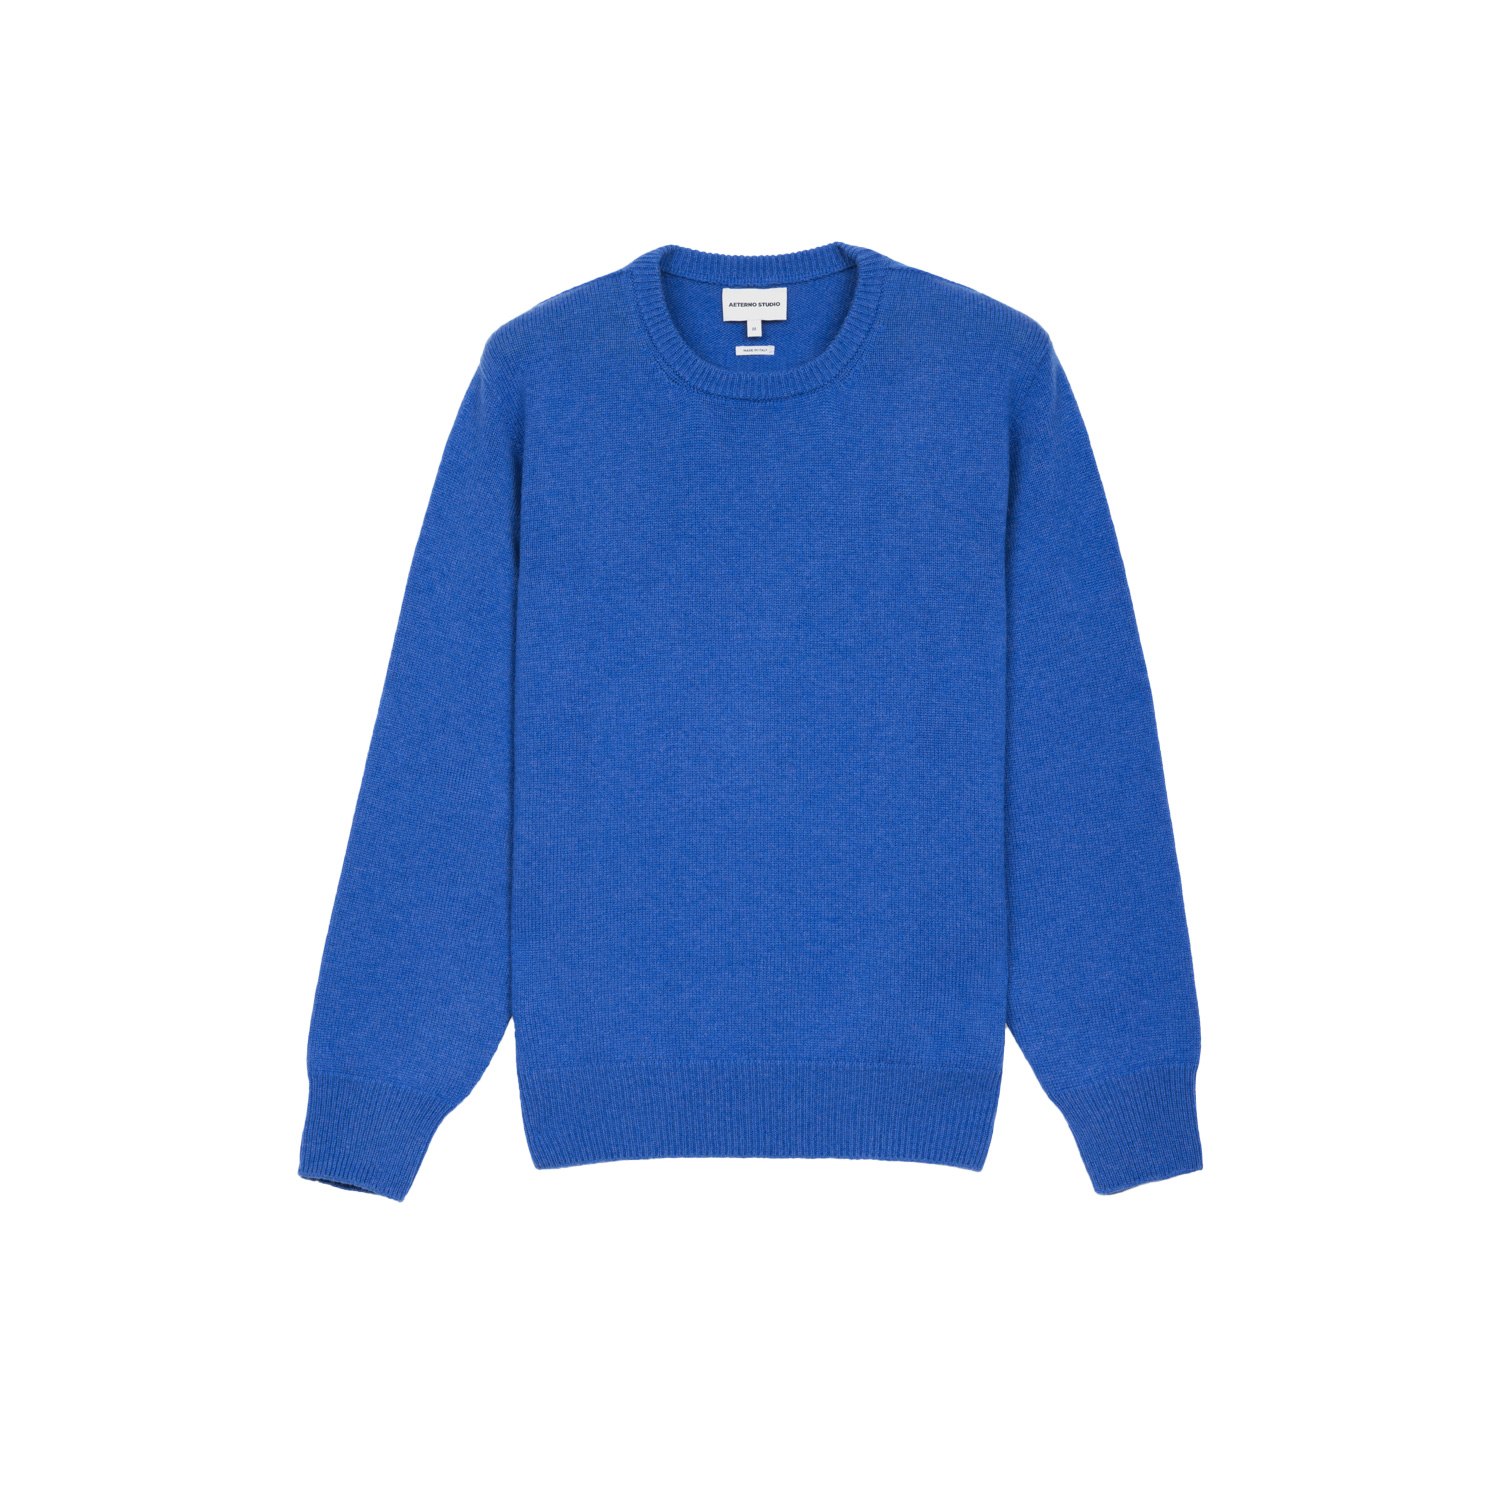 Men’s Pure Cashmere Crewneck Sweater - Blue Melange Small Aeterno Studio